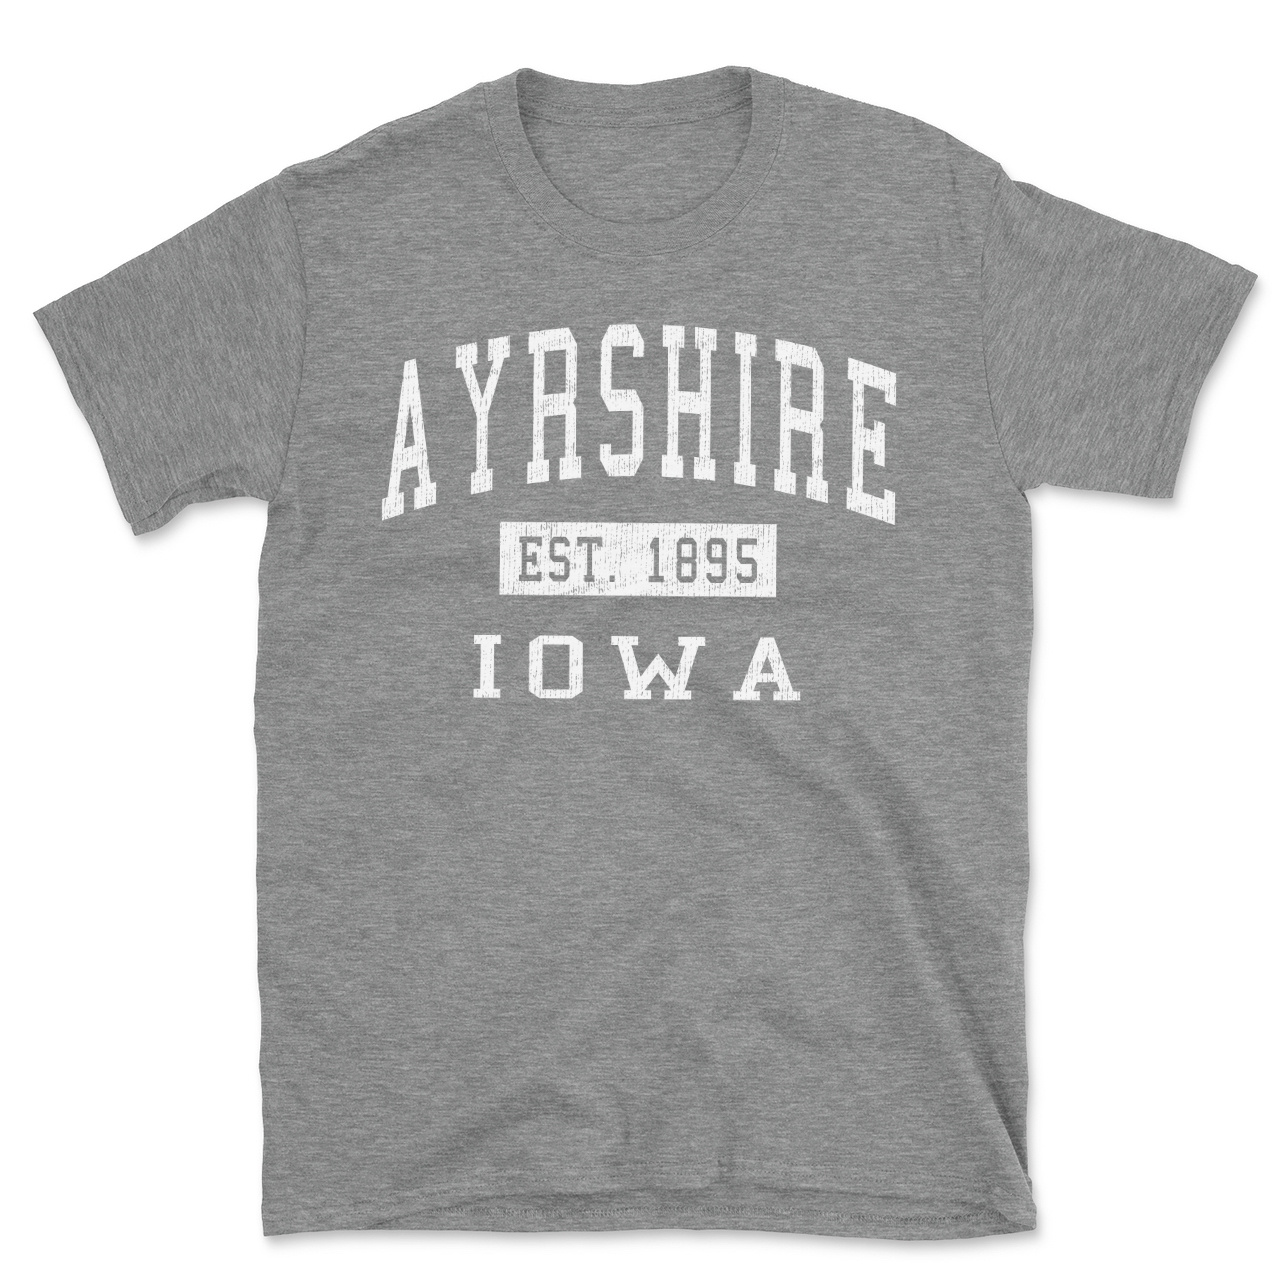 Ayrshire Iowa Classic Established Men's Cotton T-Shirt - image 1 of 1